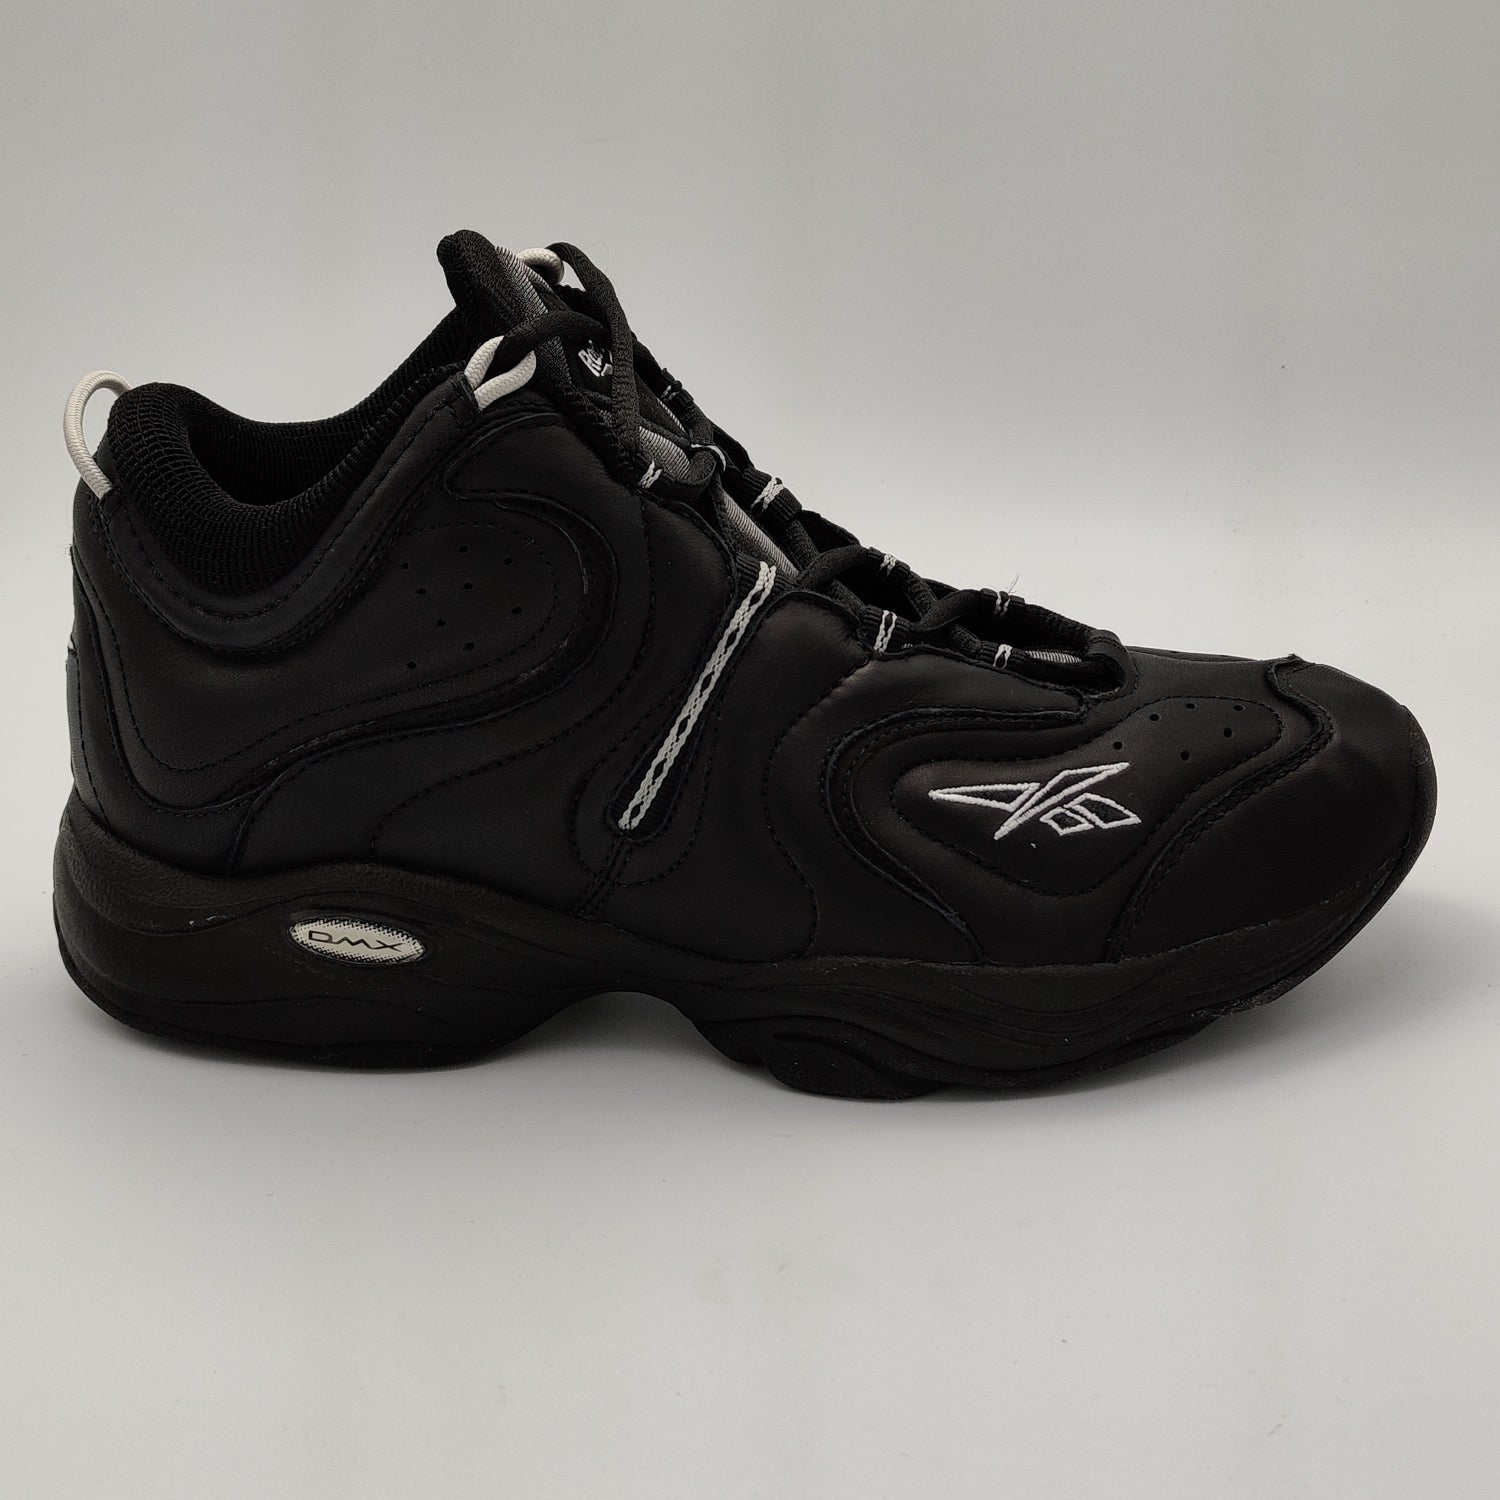 black trainers 4.5